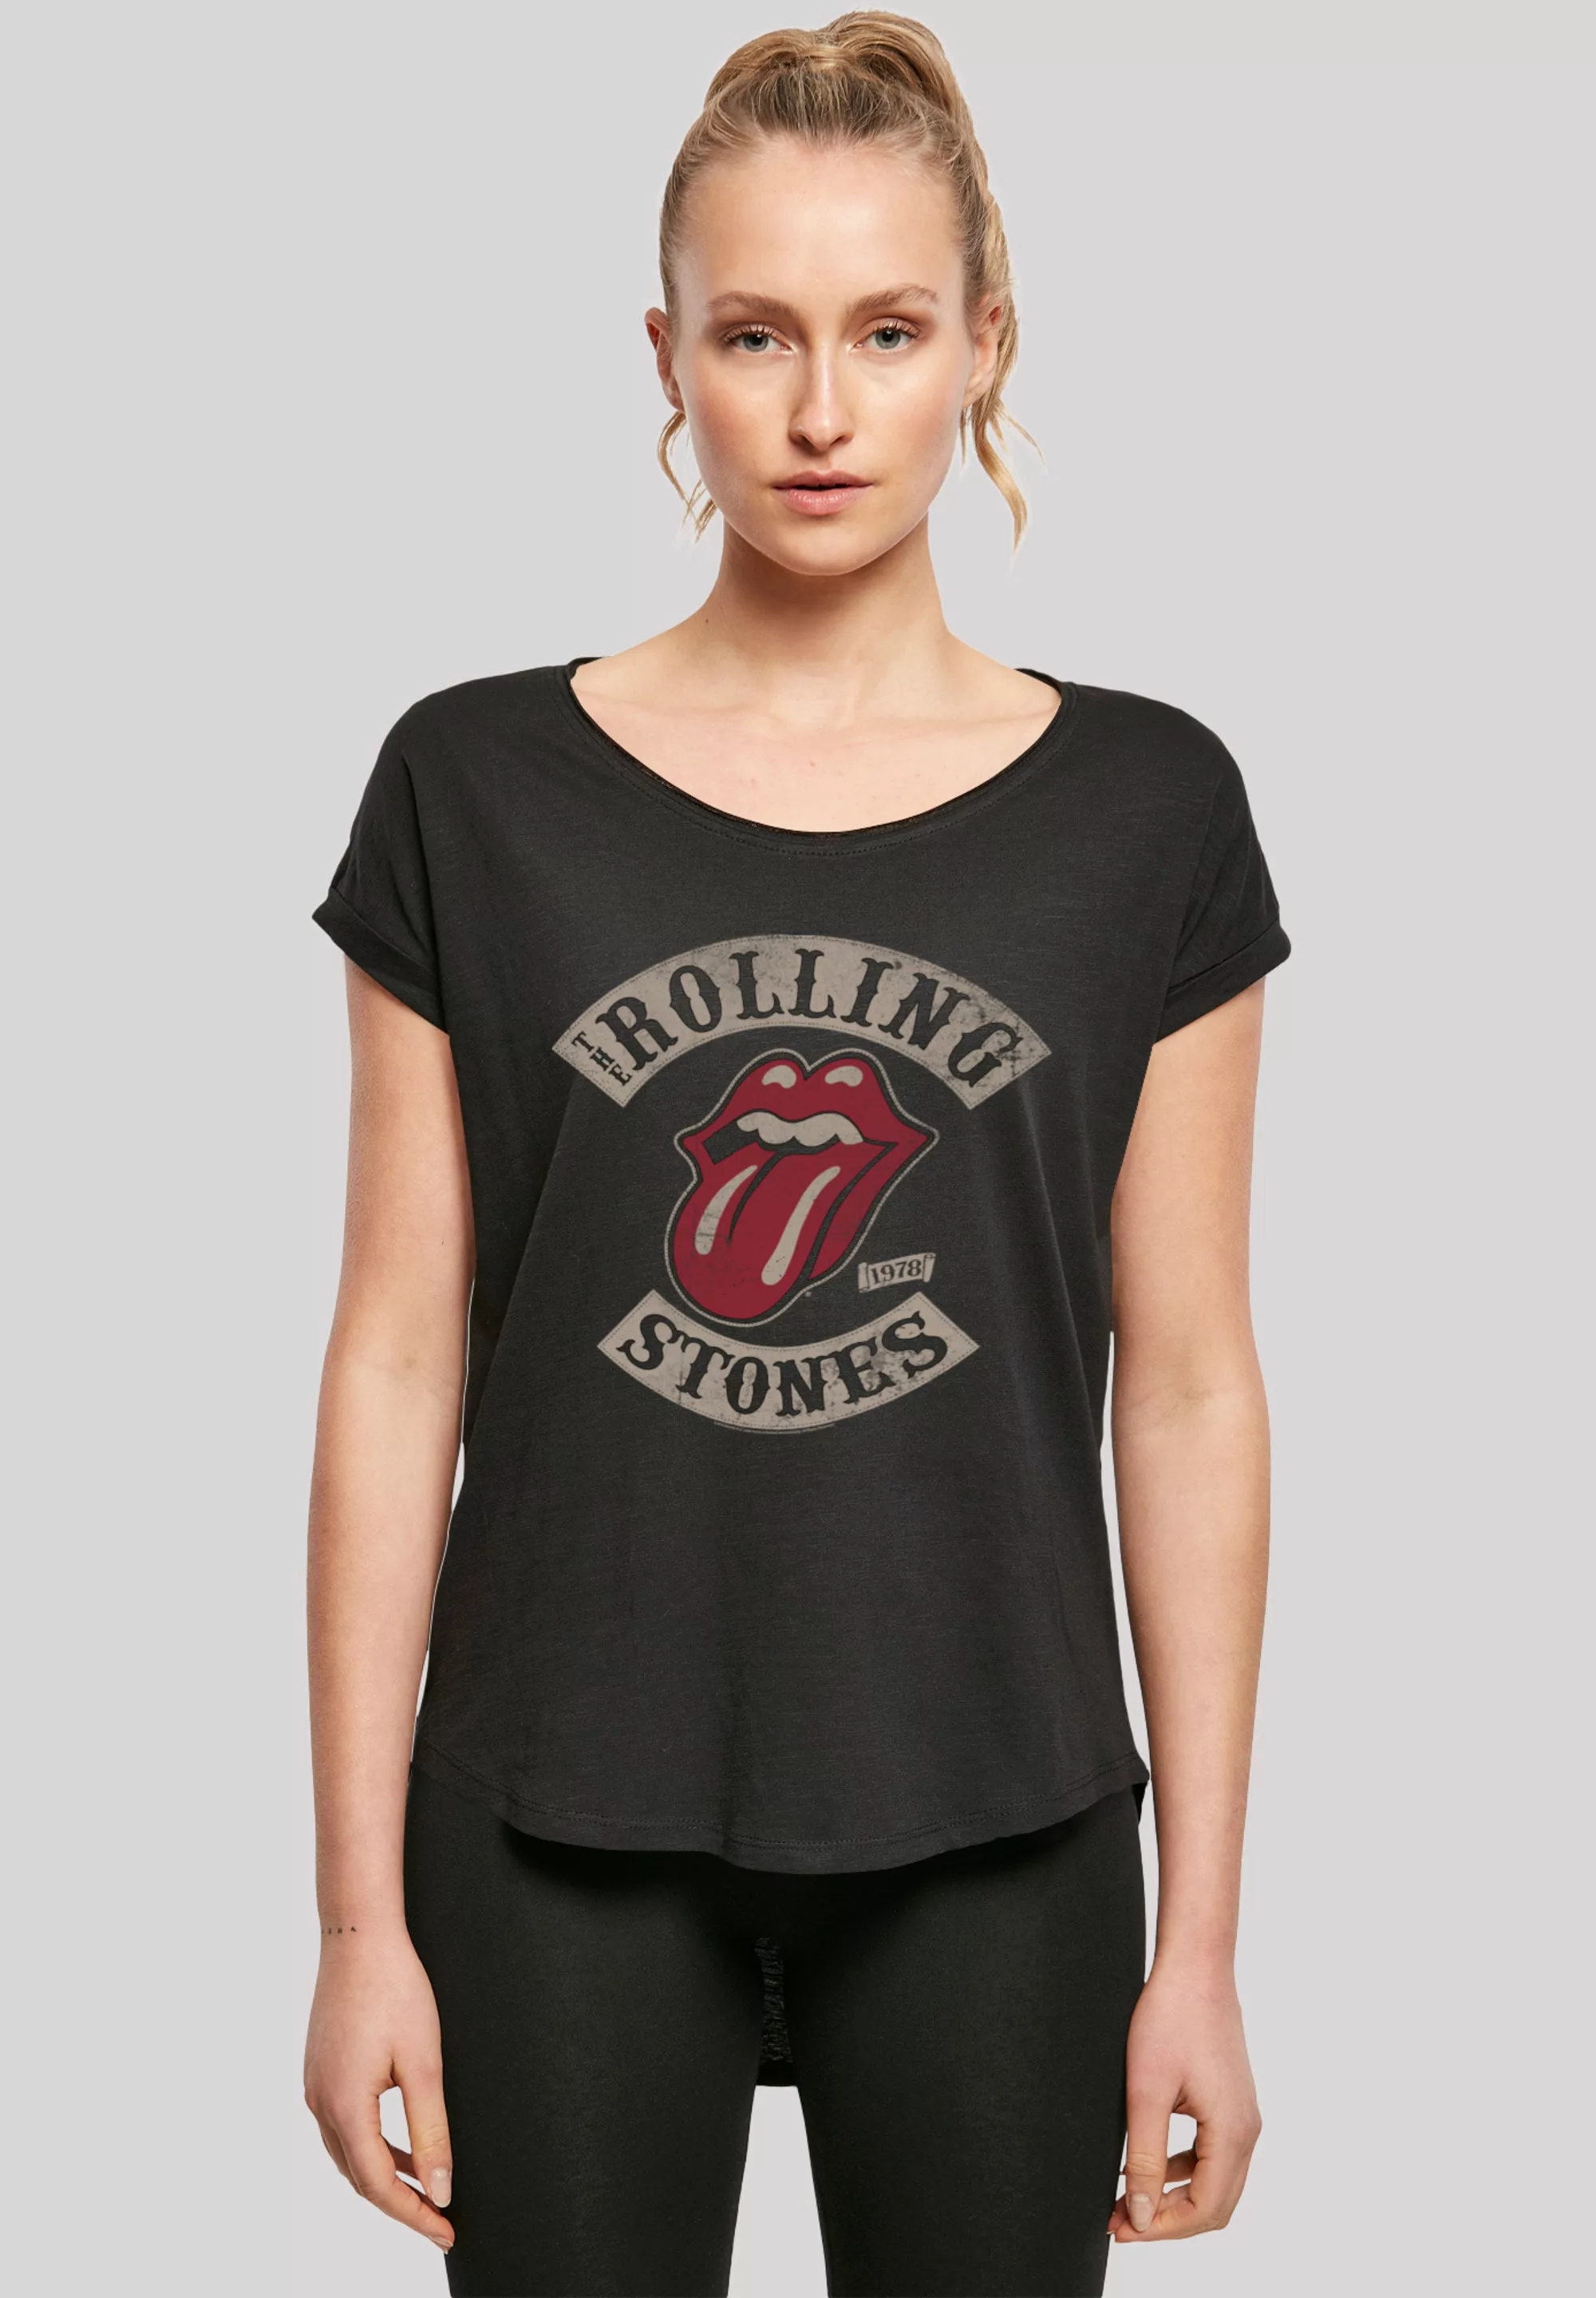 F4NT4STIC T-Shirt "The Rolling Stones Rockband Tour 78 Black", Print günstig online kaufen